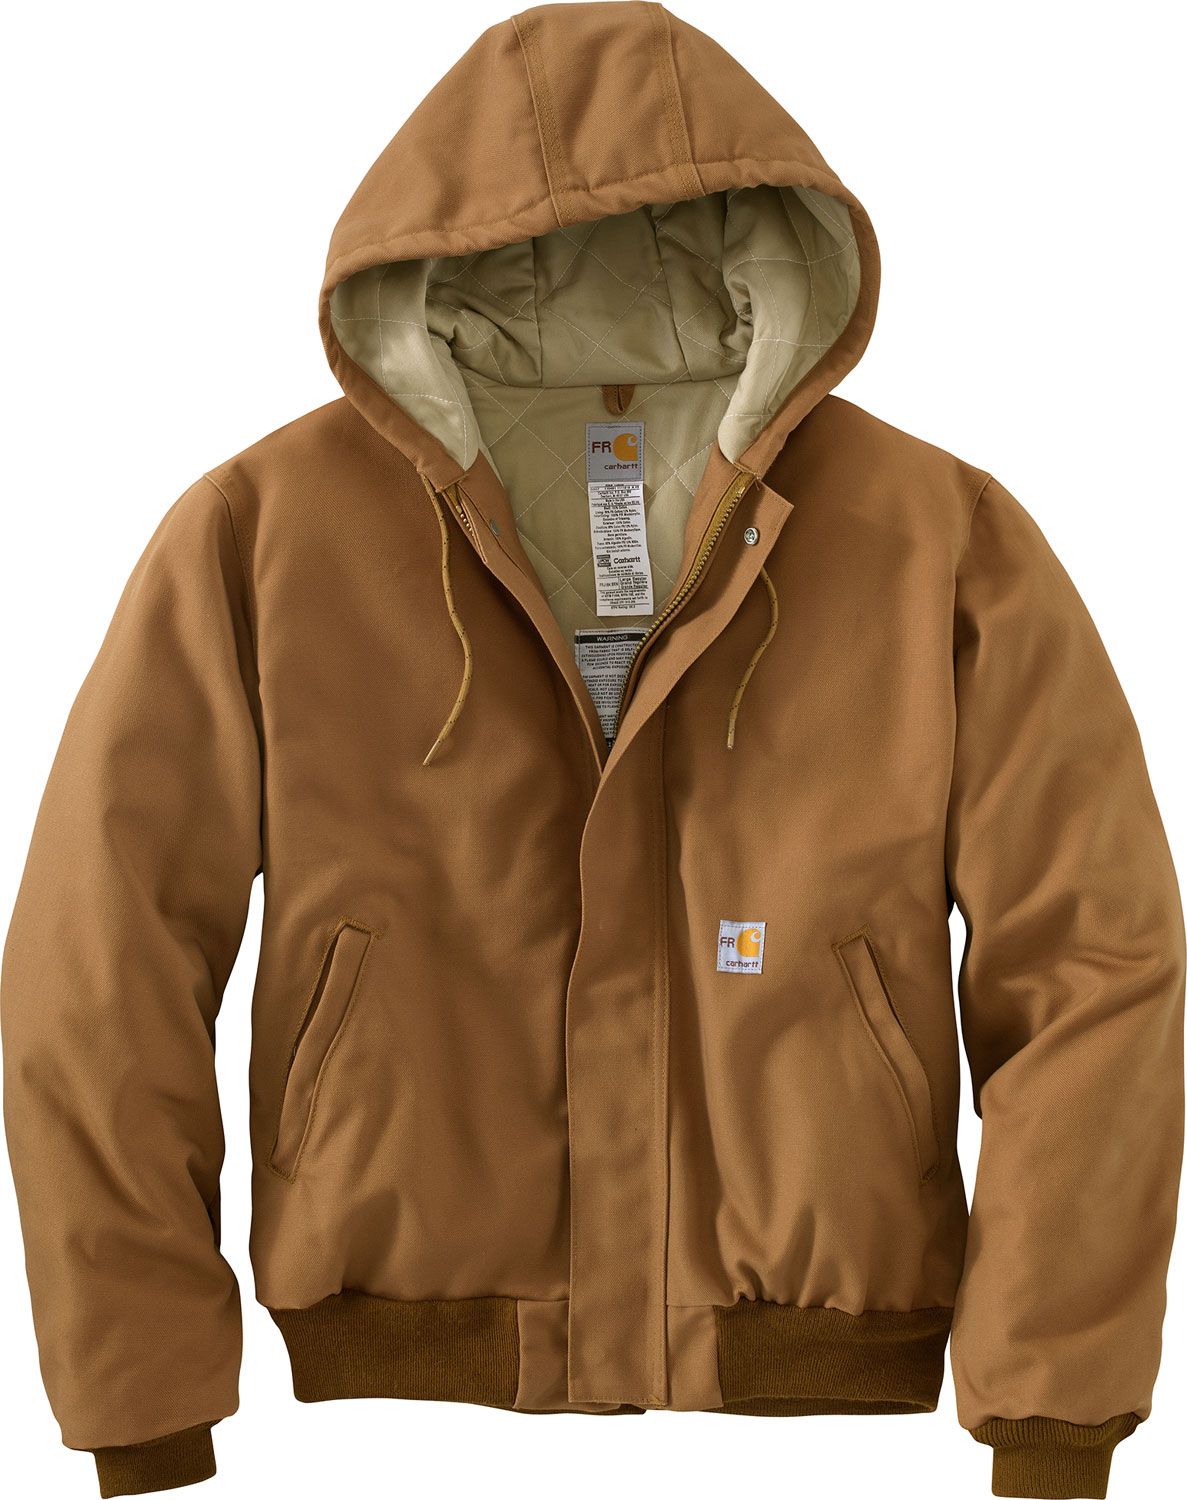 Carhartt Jackets & Coats | DICK'S Sporting Goods